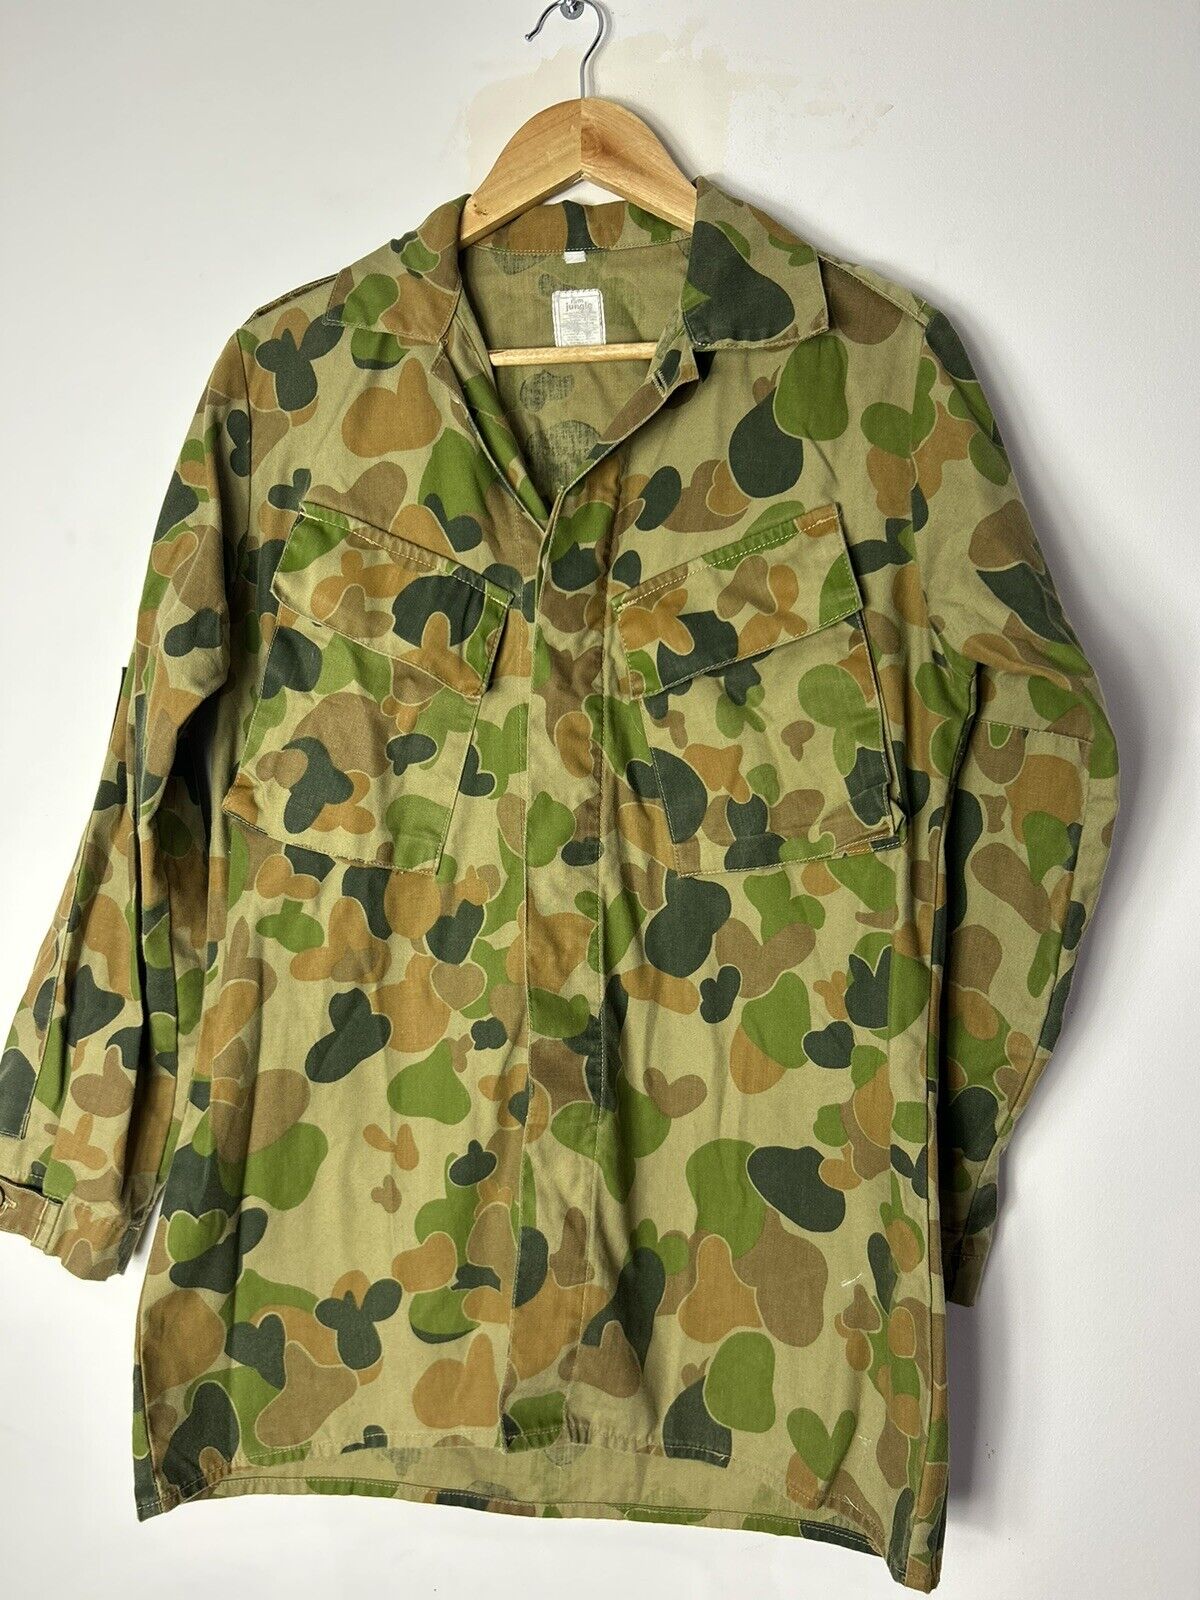 Men's Australian Army Camouflage Camo Military Rum Jungle Shirt Jacket Sz L M